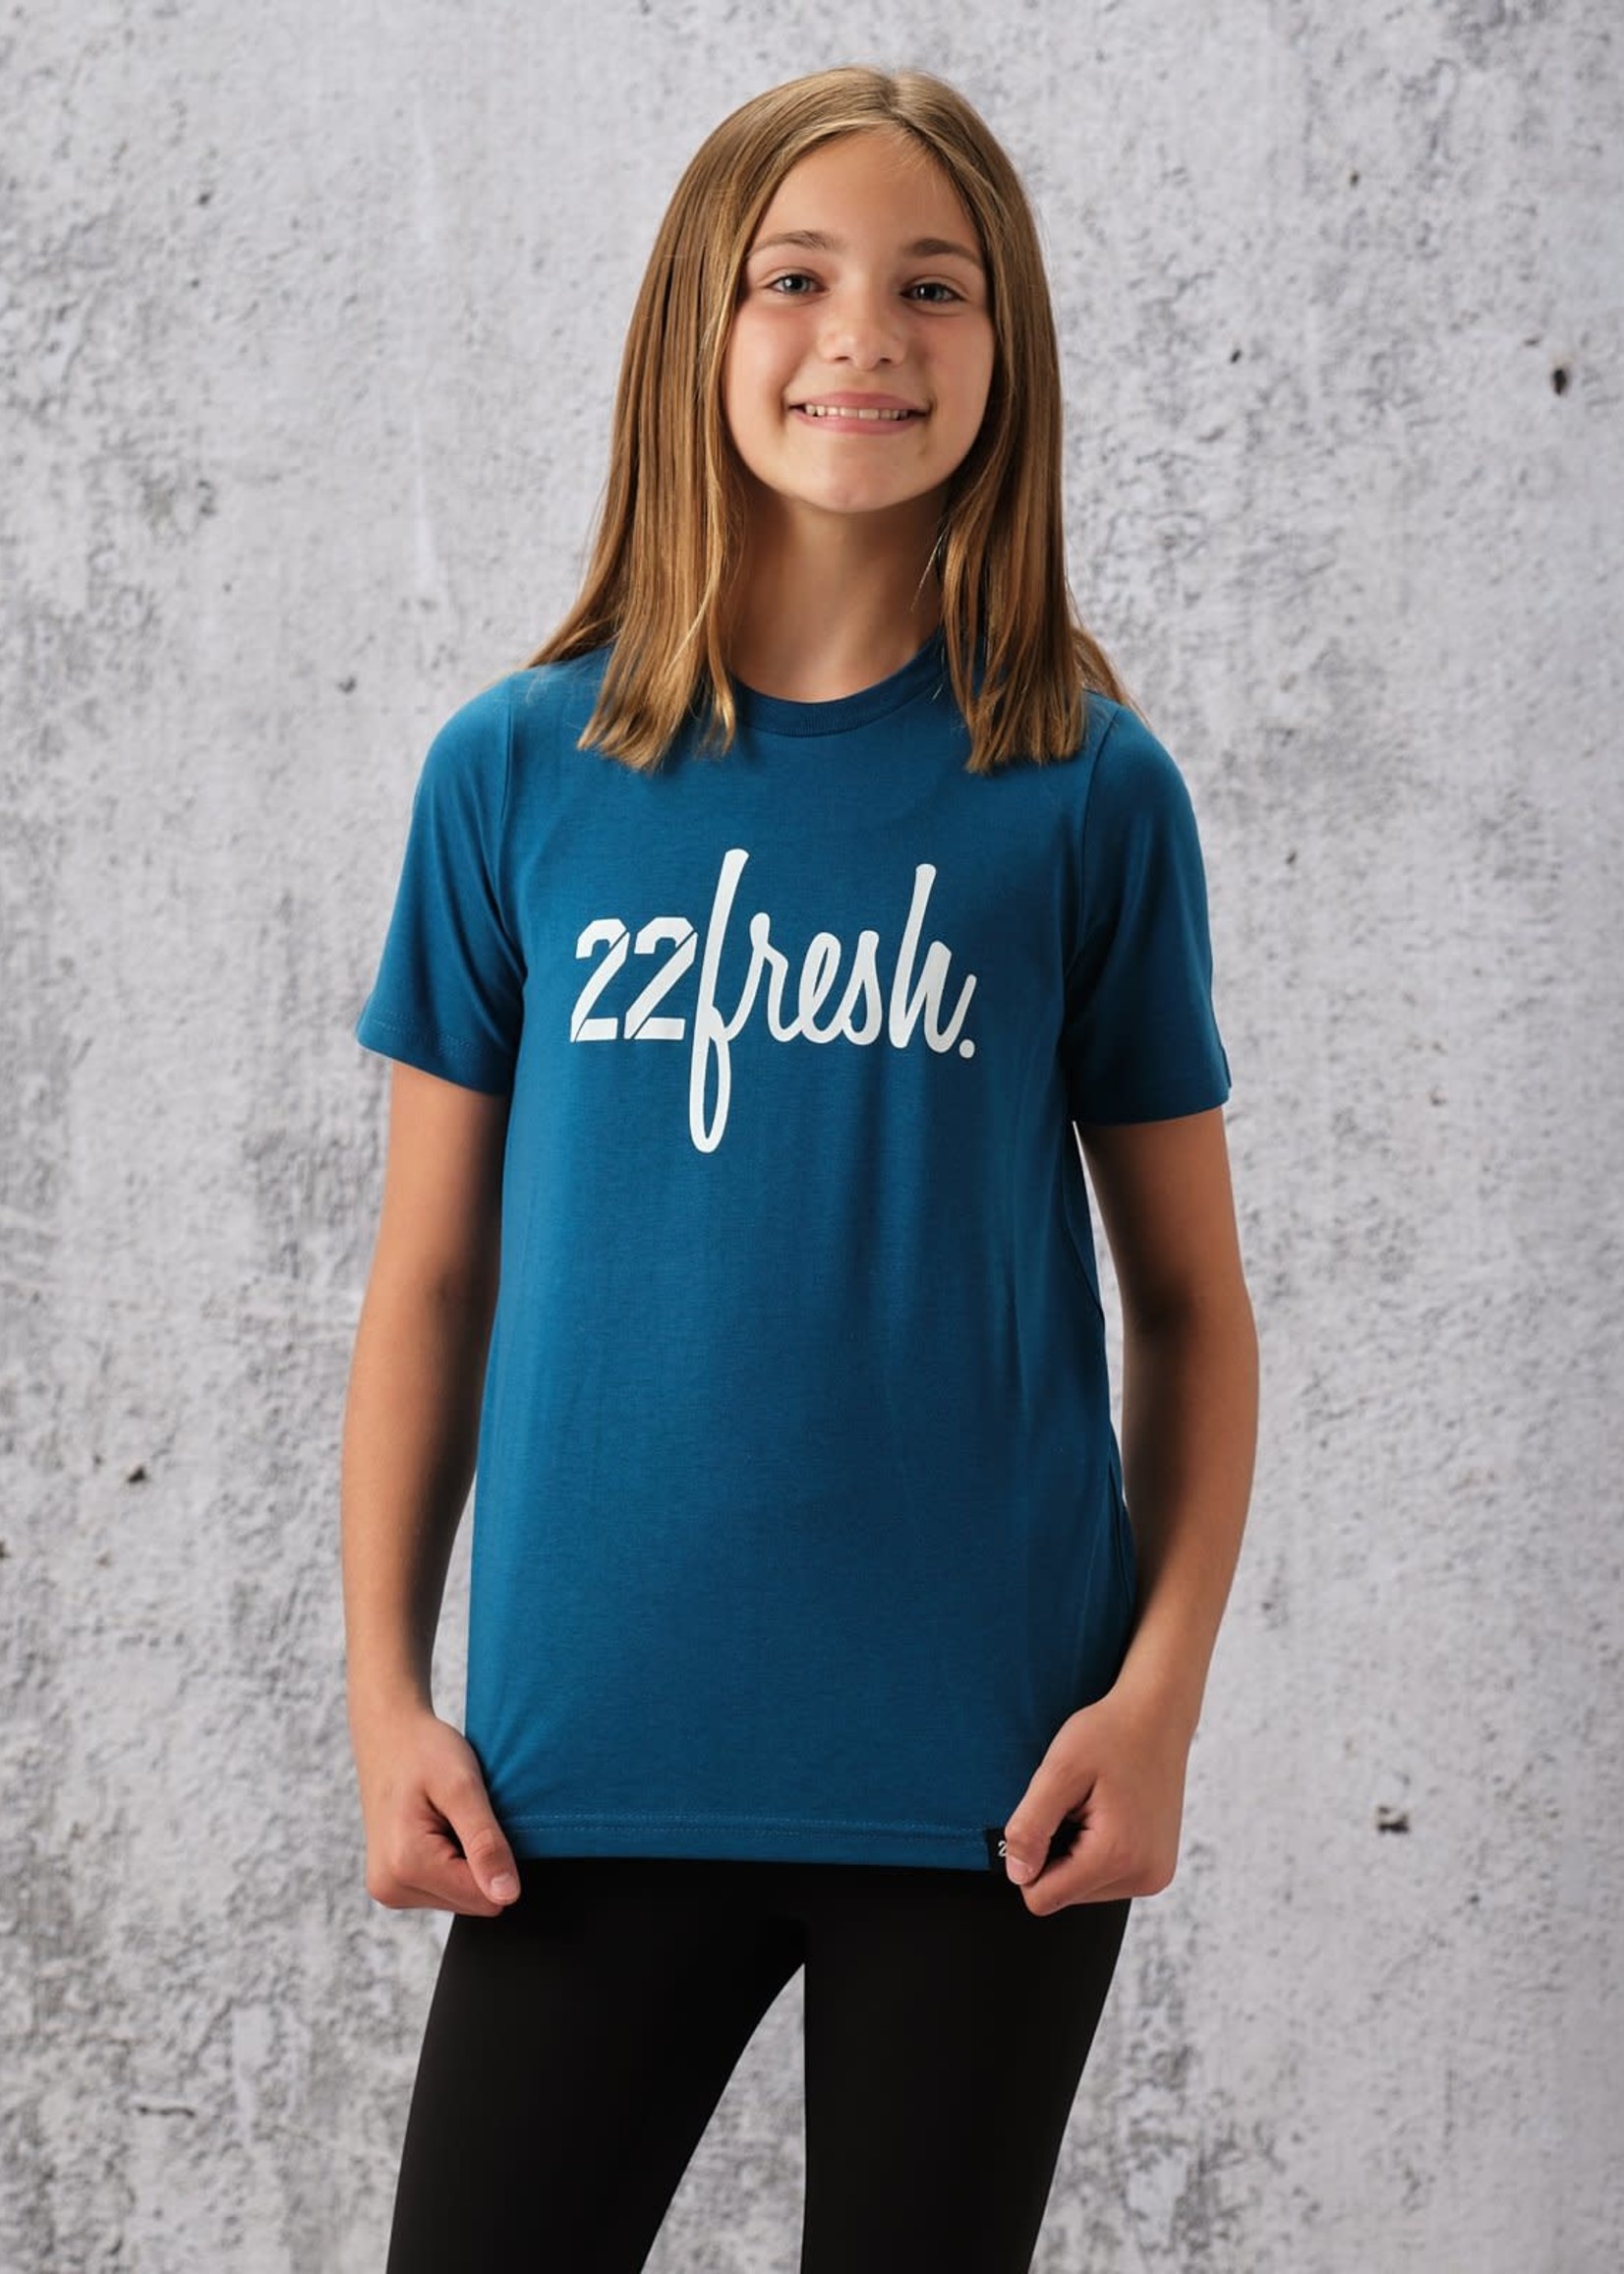 22 Fresh Alma Mater T-Shirt Blue